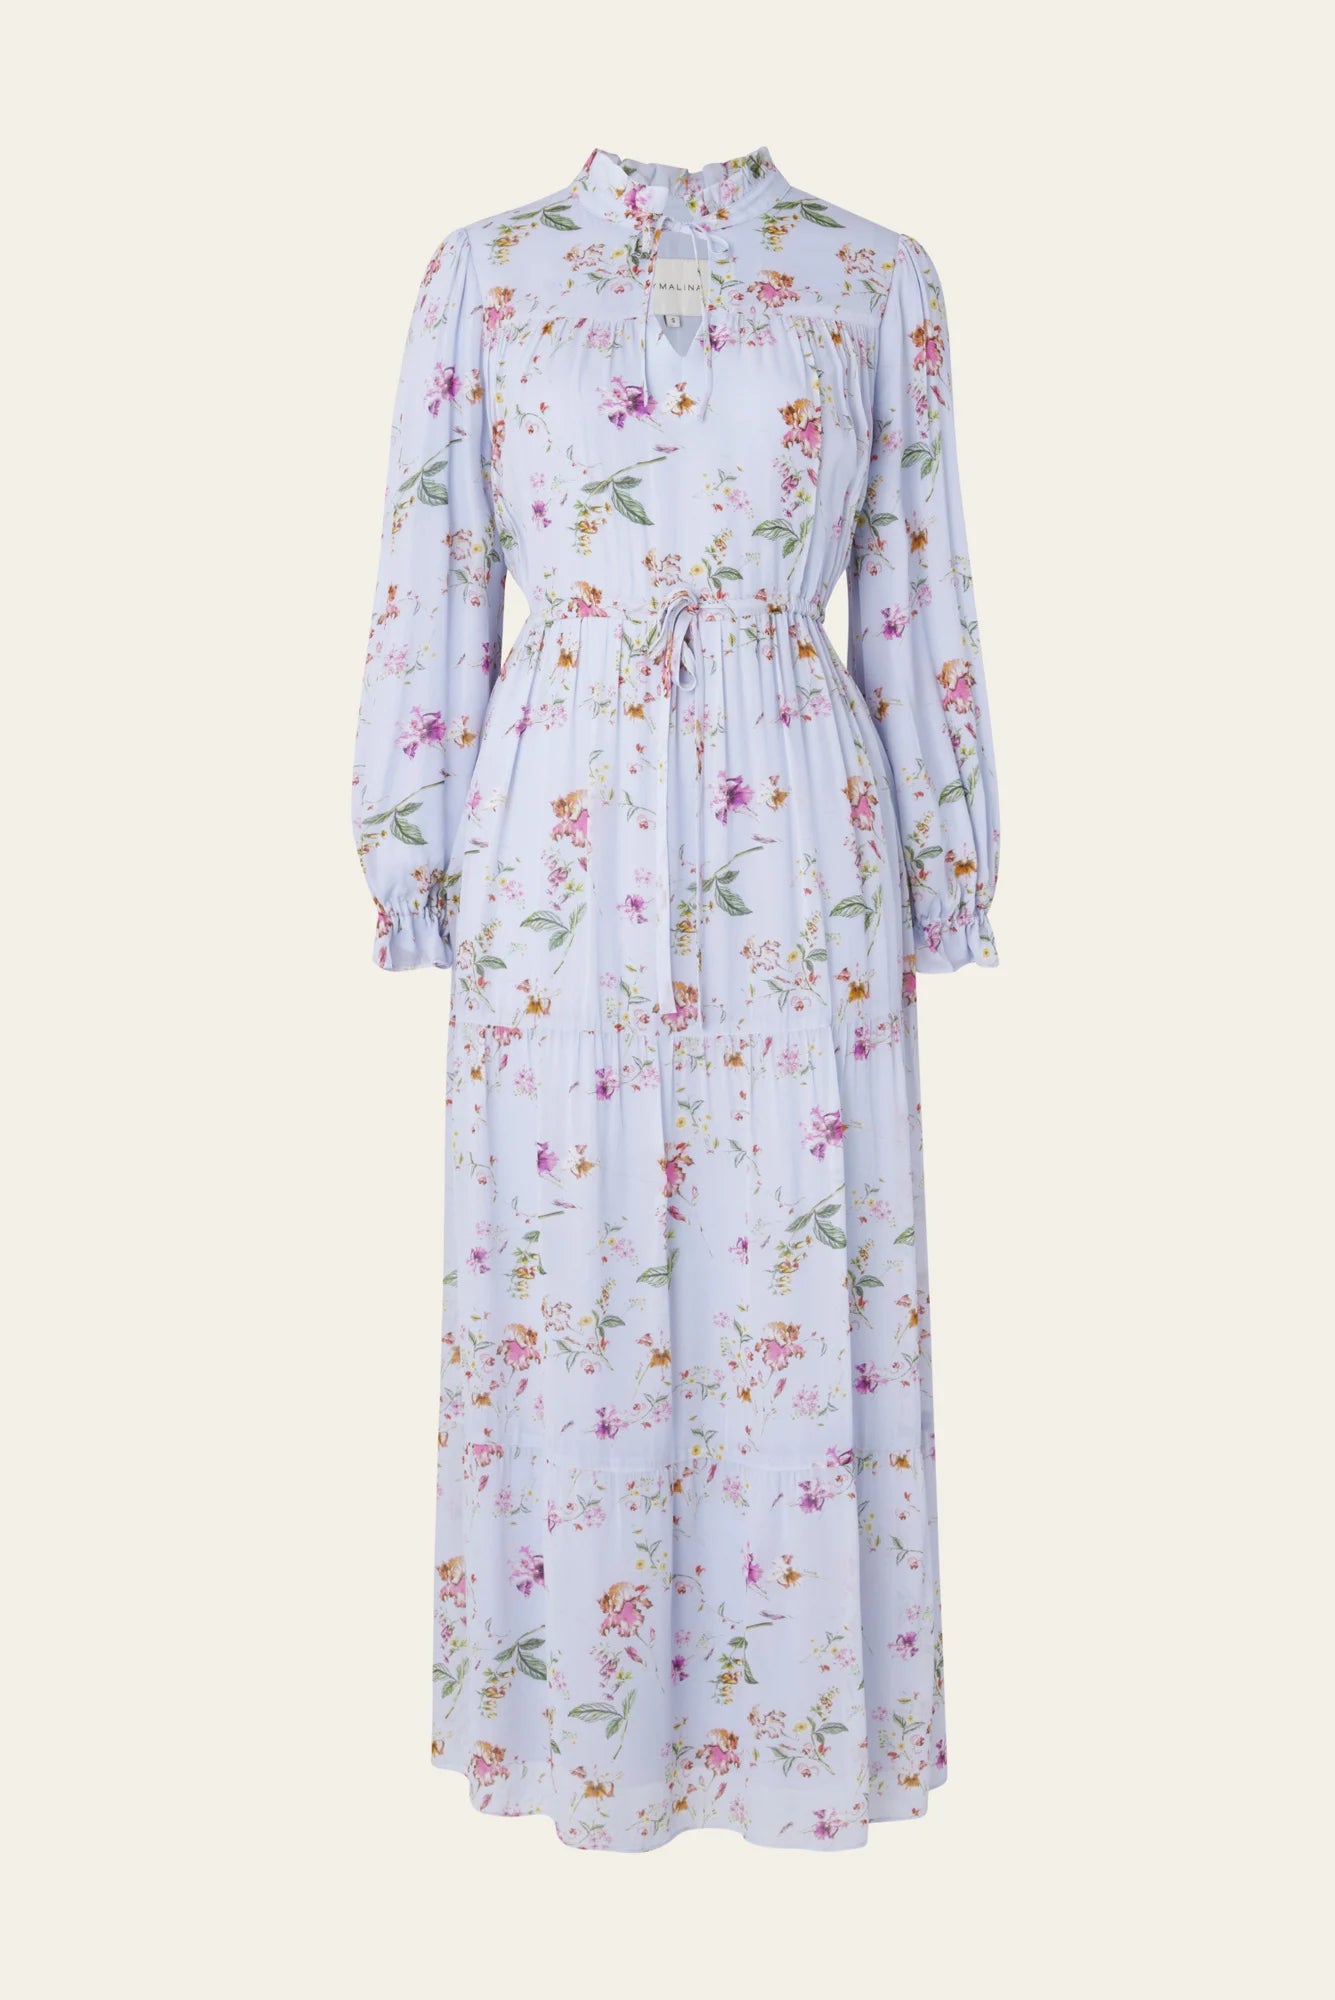 Florencia Floral Dress